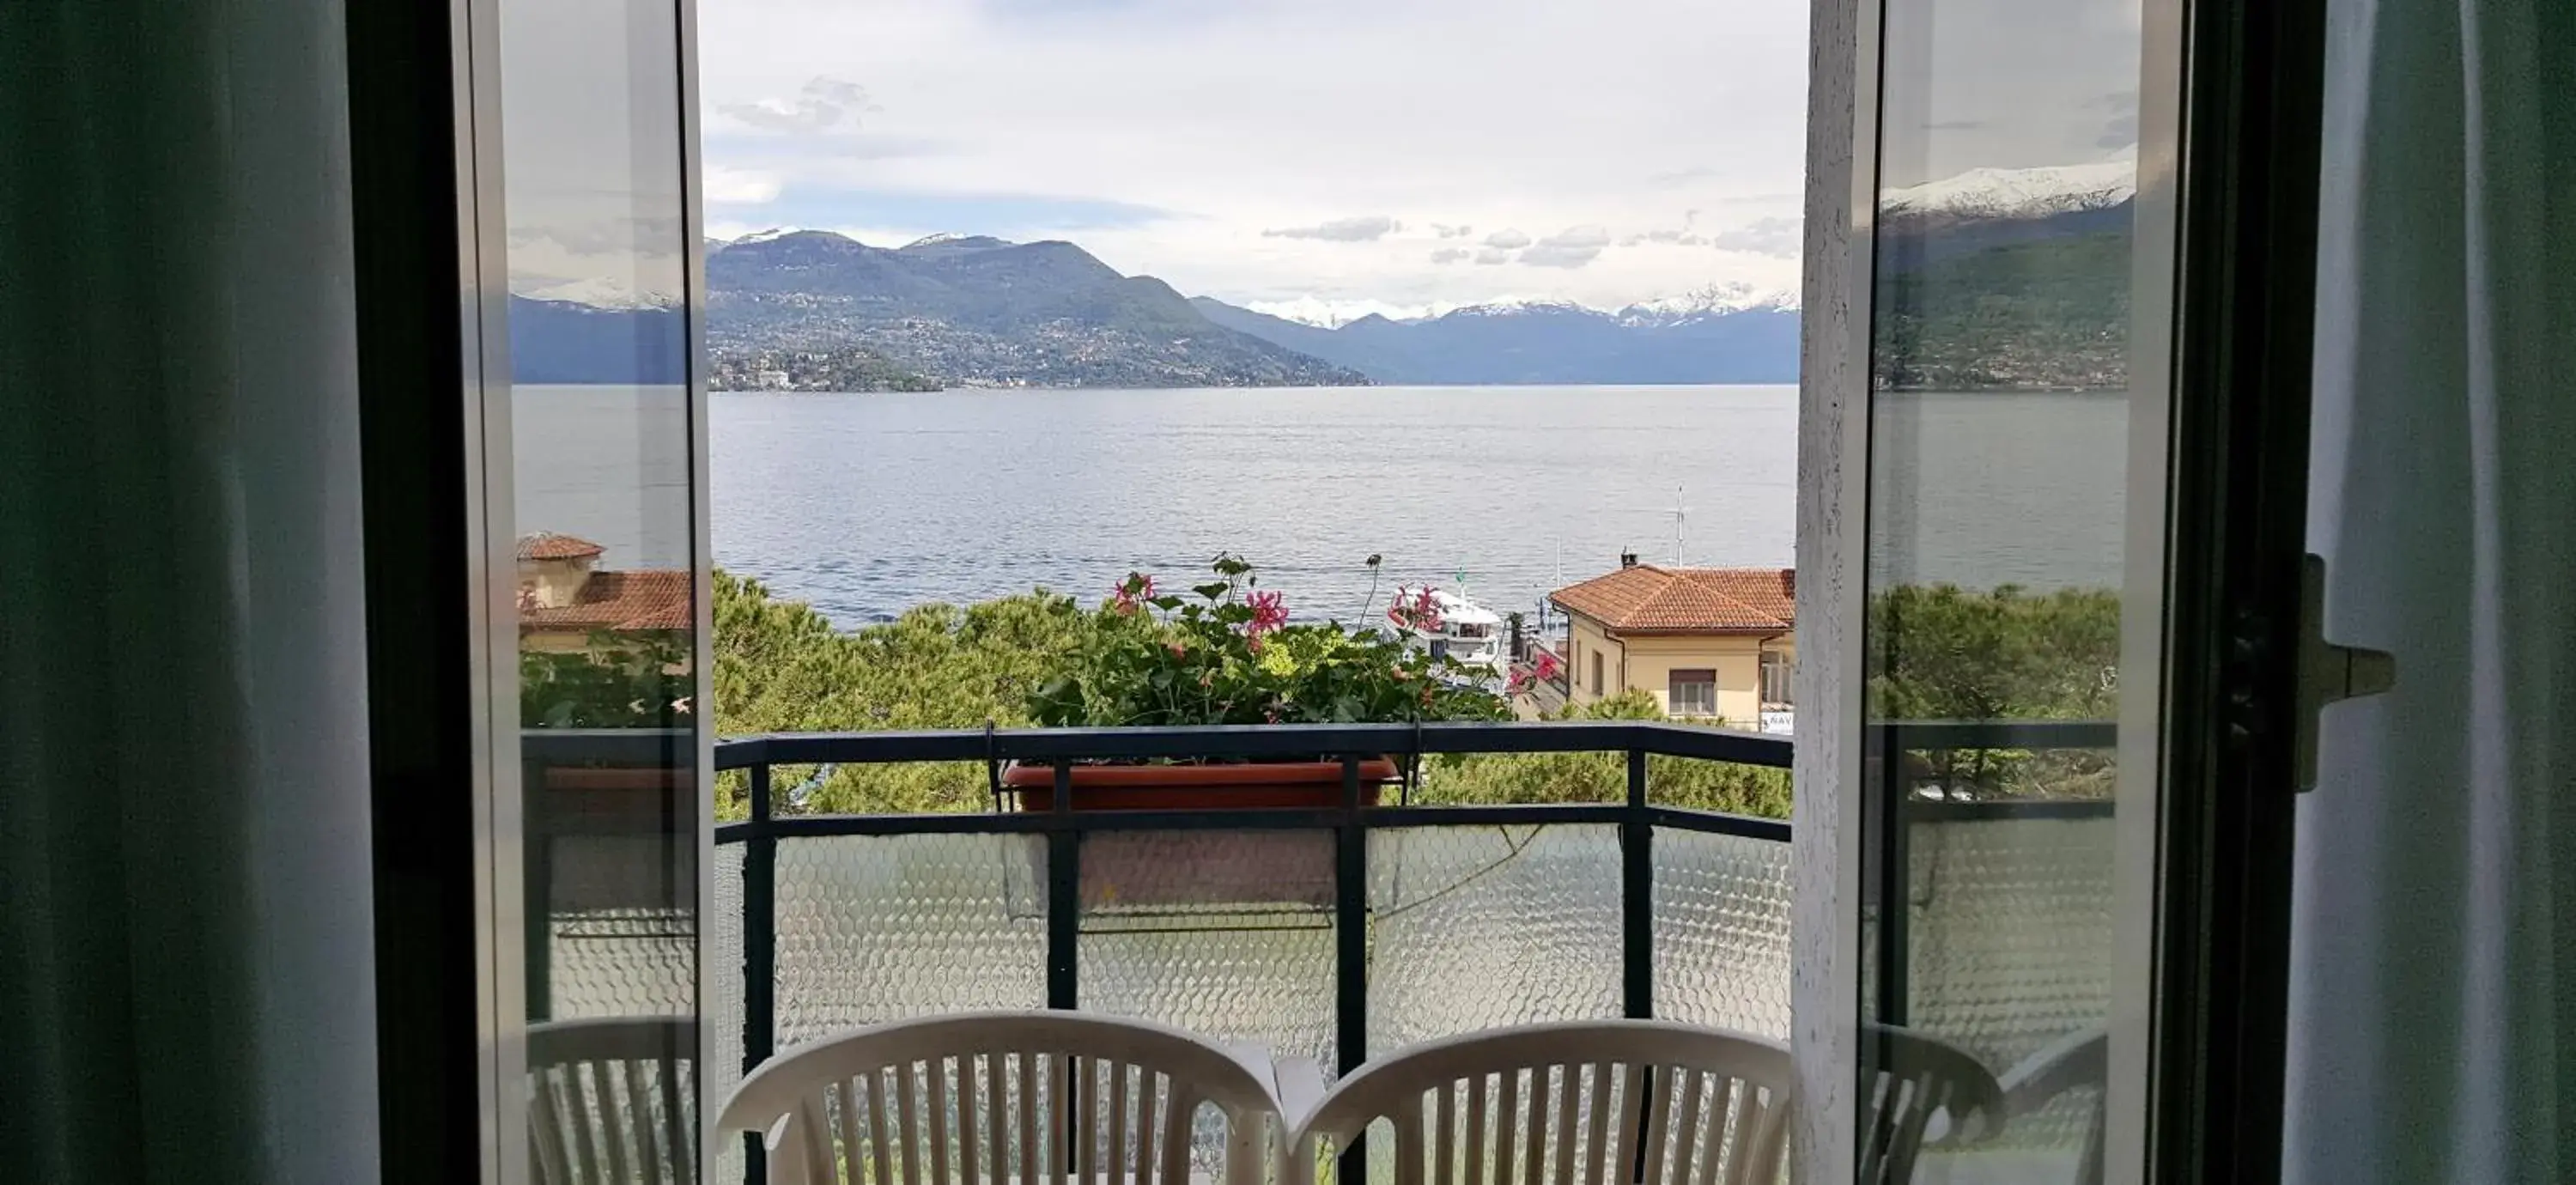 Balcony/Terrace, River View in Hotel Italie et Suisse